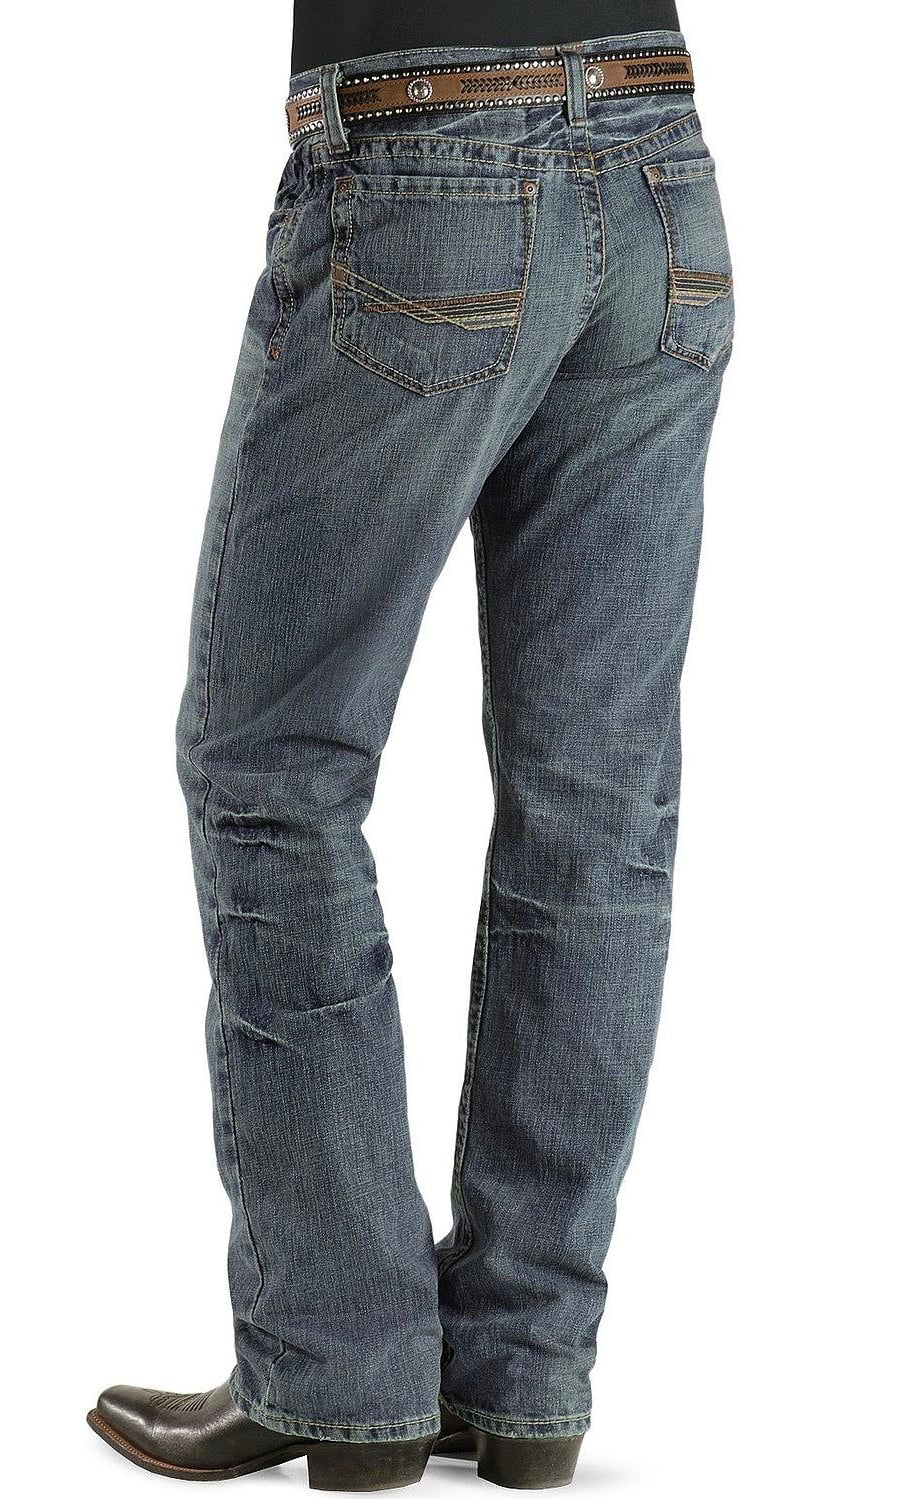 Ariat - Ariat Men's Denim Jeans M4 Scoundrel Relaxed Fit - 10008403 ...